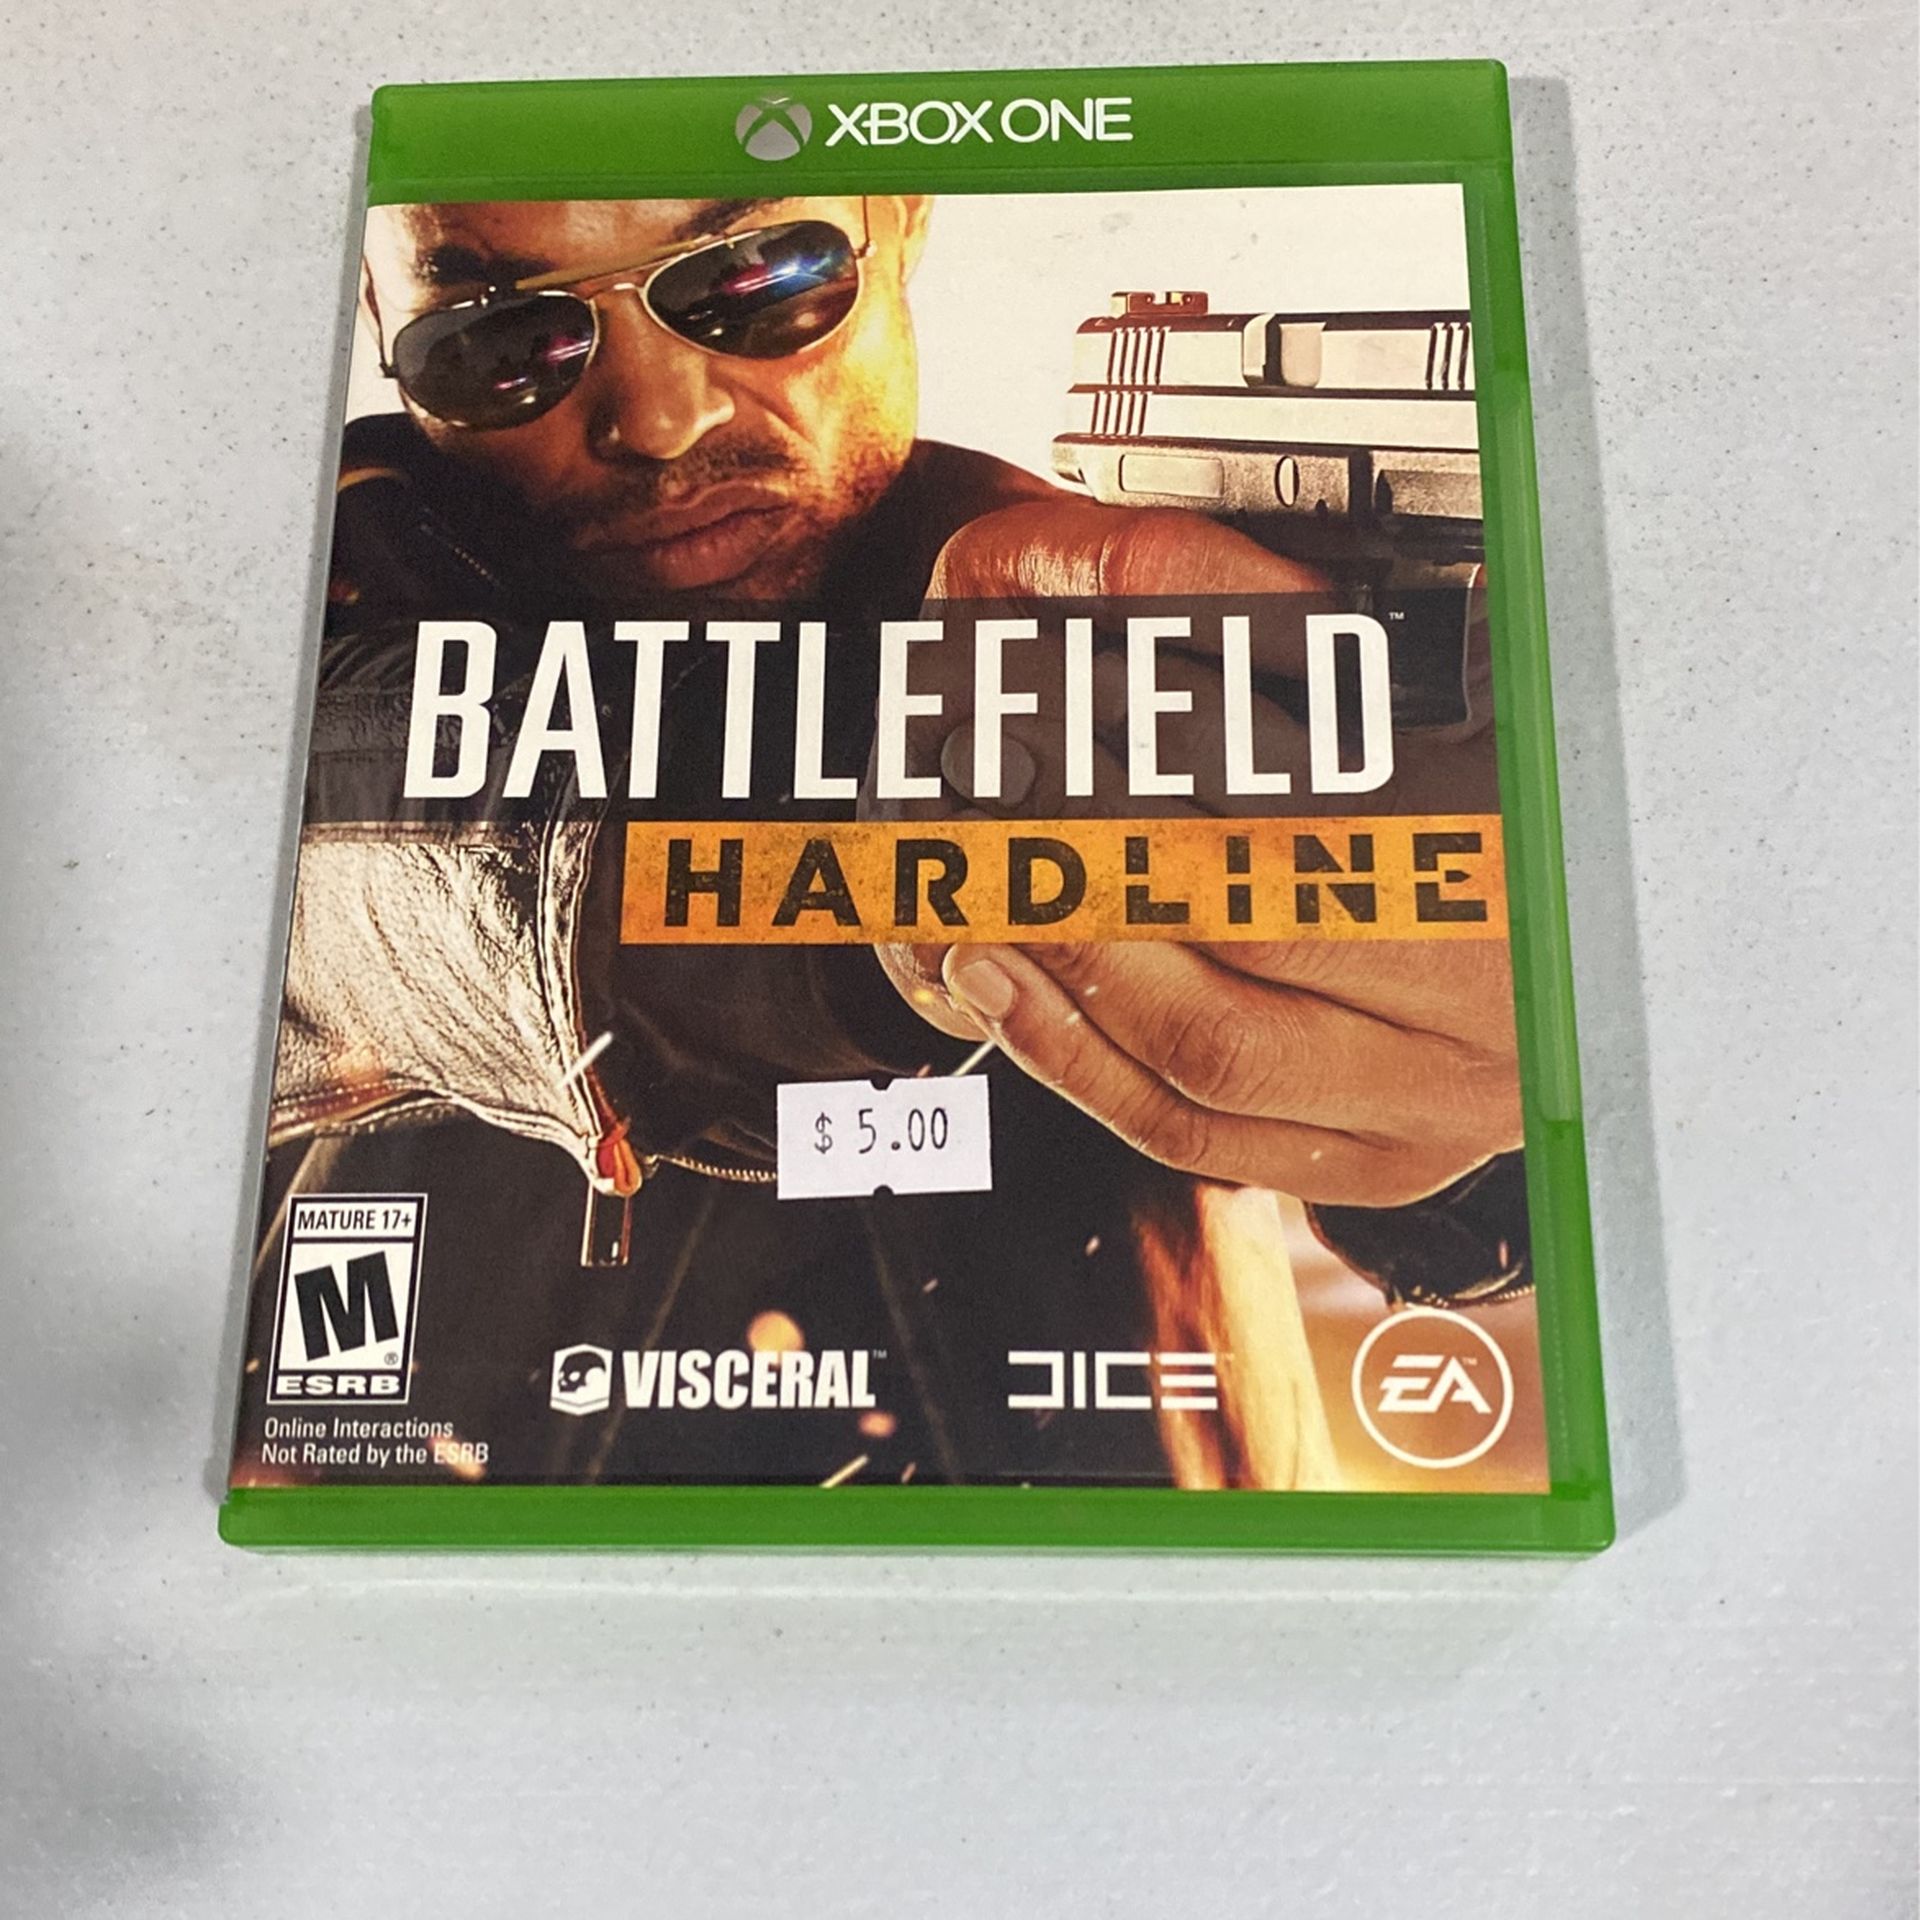 Battlefield Hardline (Microsoft Xbox One, 2015) Complete 